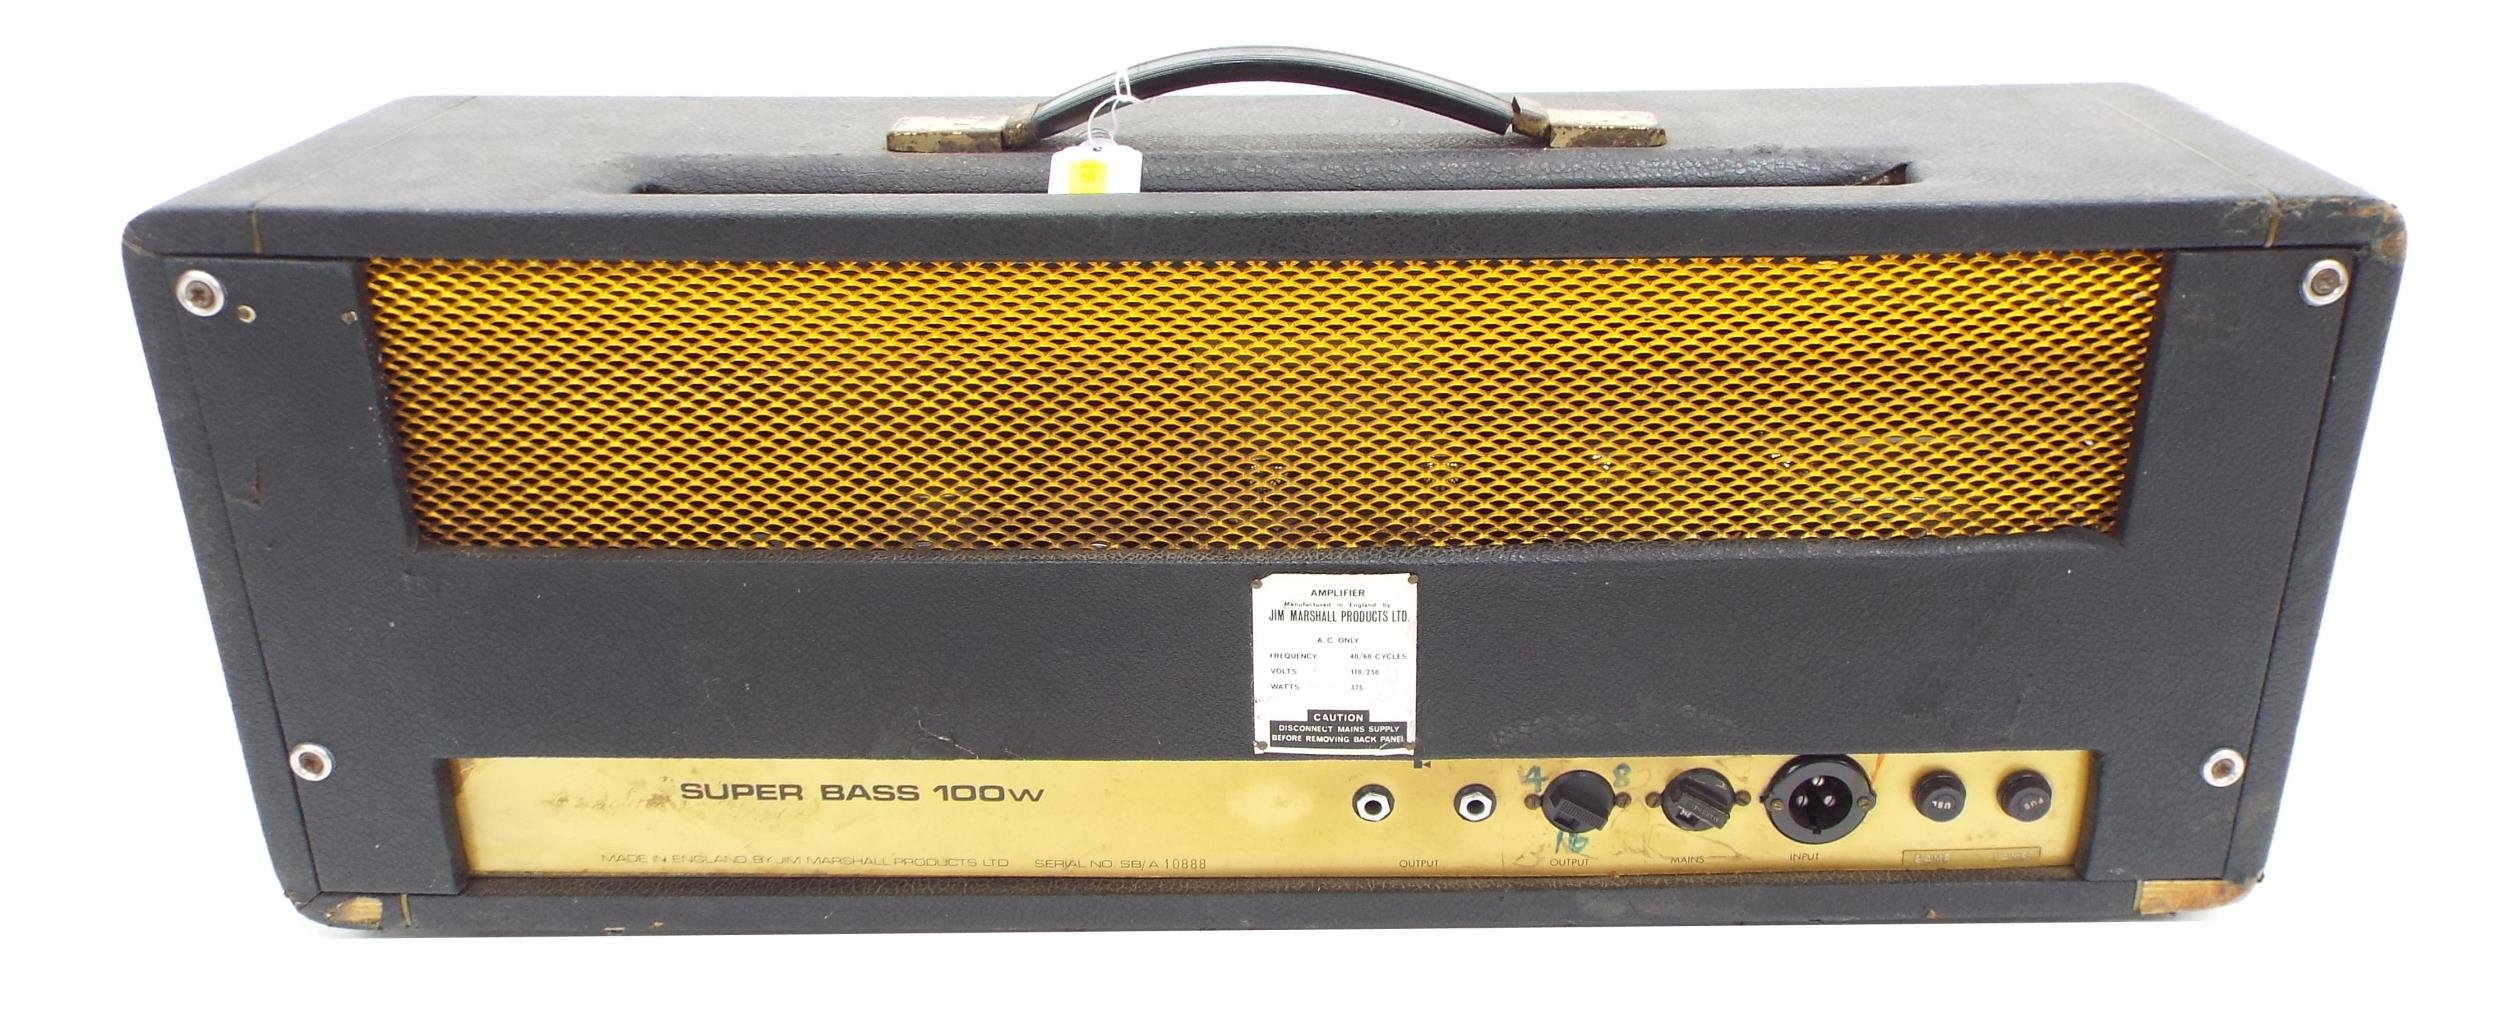 Late 1960s Marshall JMP 'Plexi' Model 1992 Super Bass 100 watt guitar amplifier, made in England, - Image 2 of 2